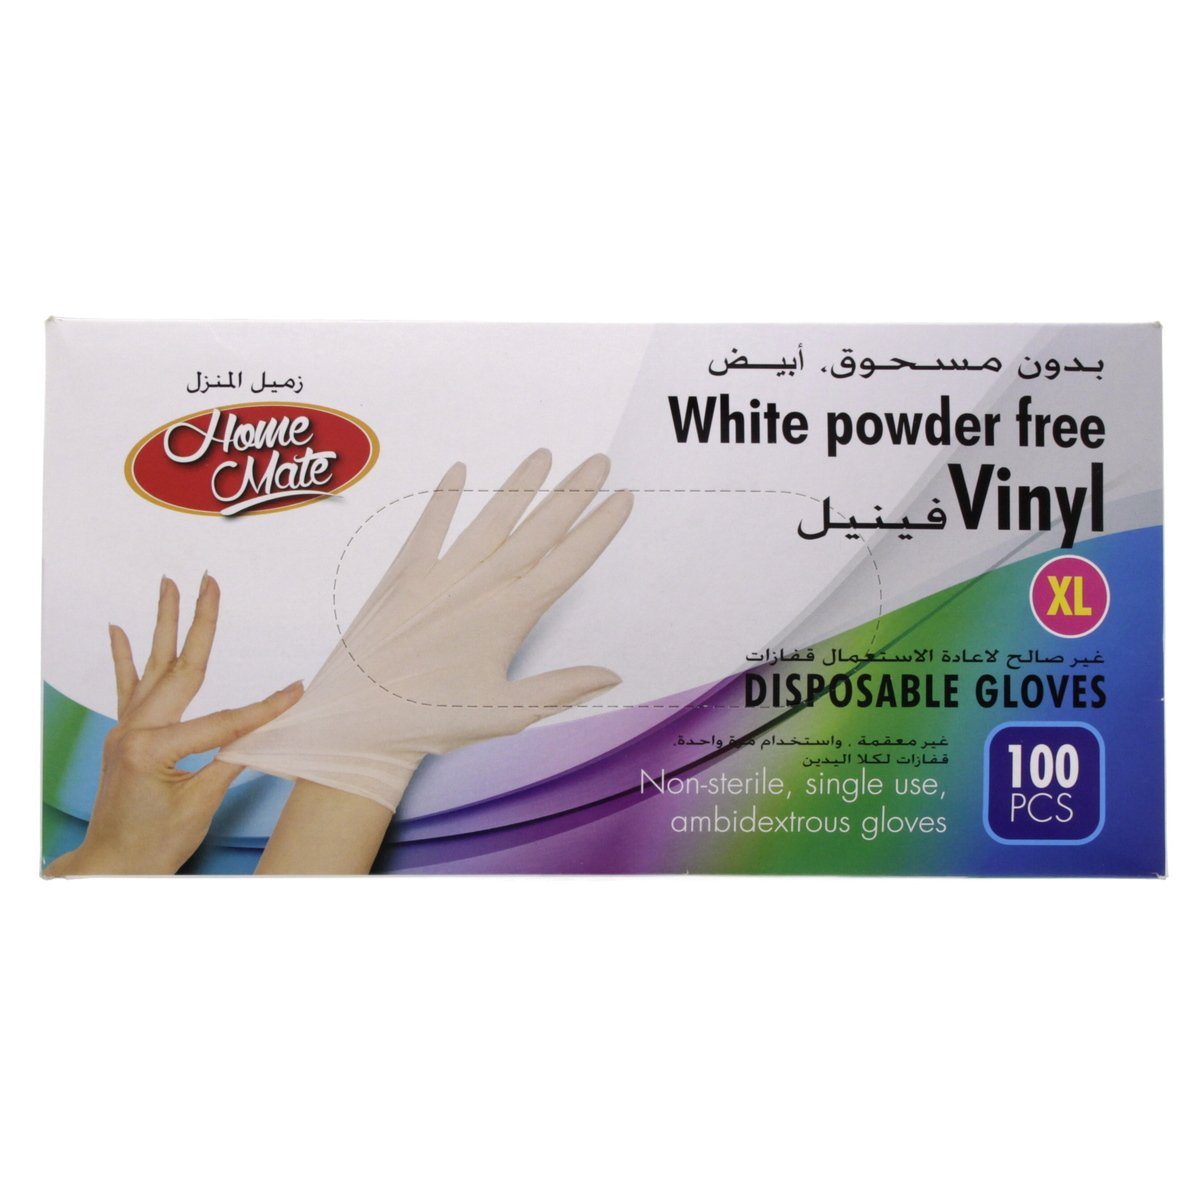 Home Mate White Powder Free Vinyl Gloves XL, 100 pcs